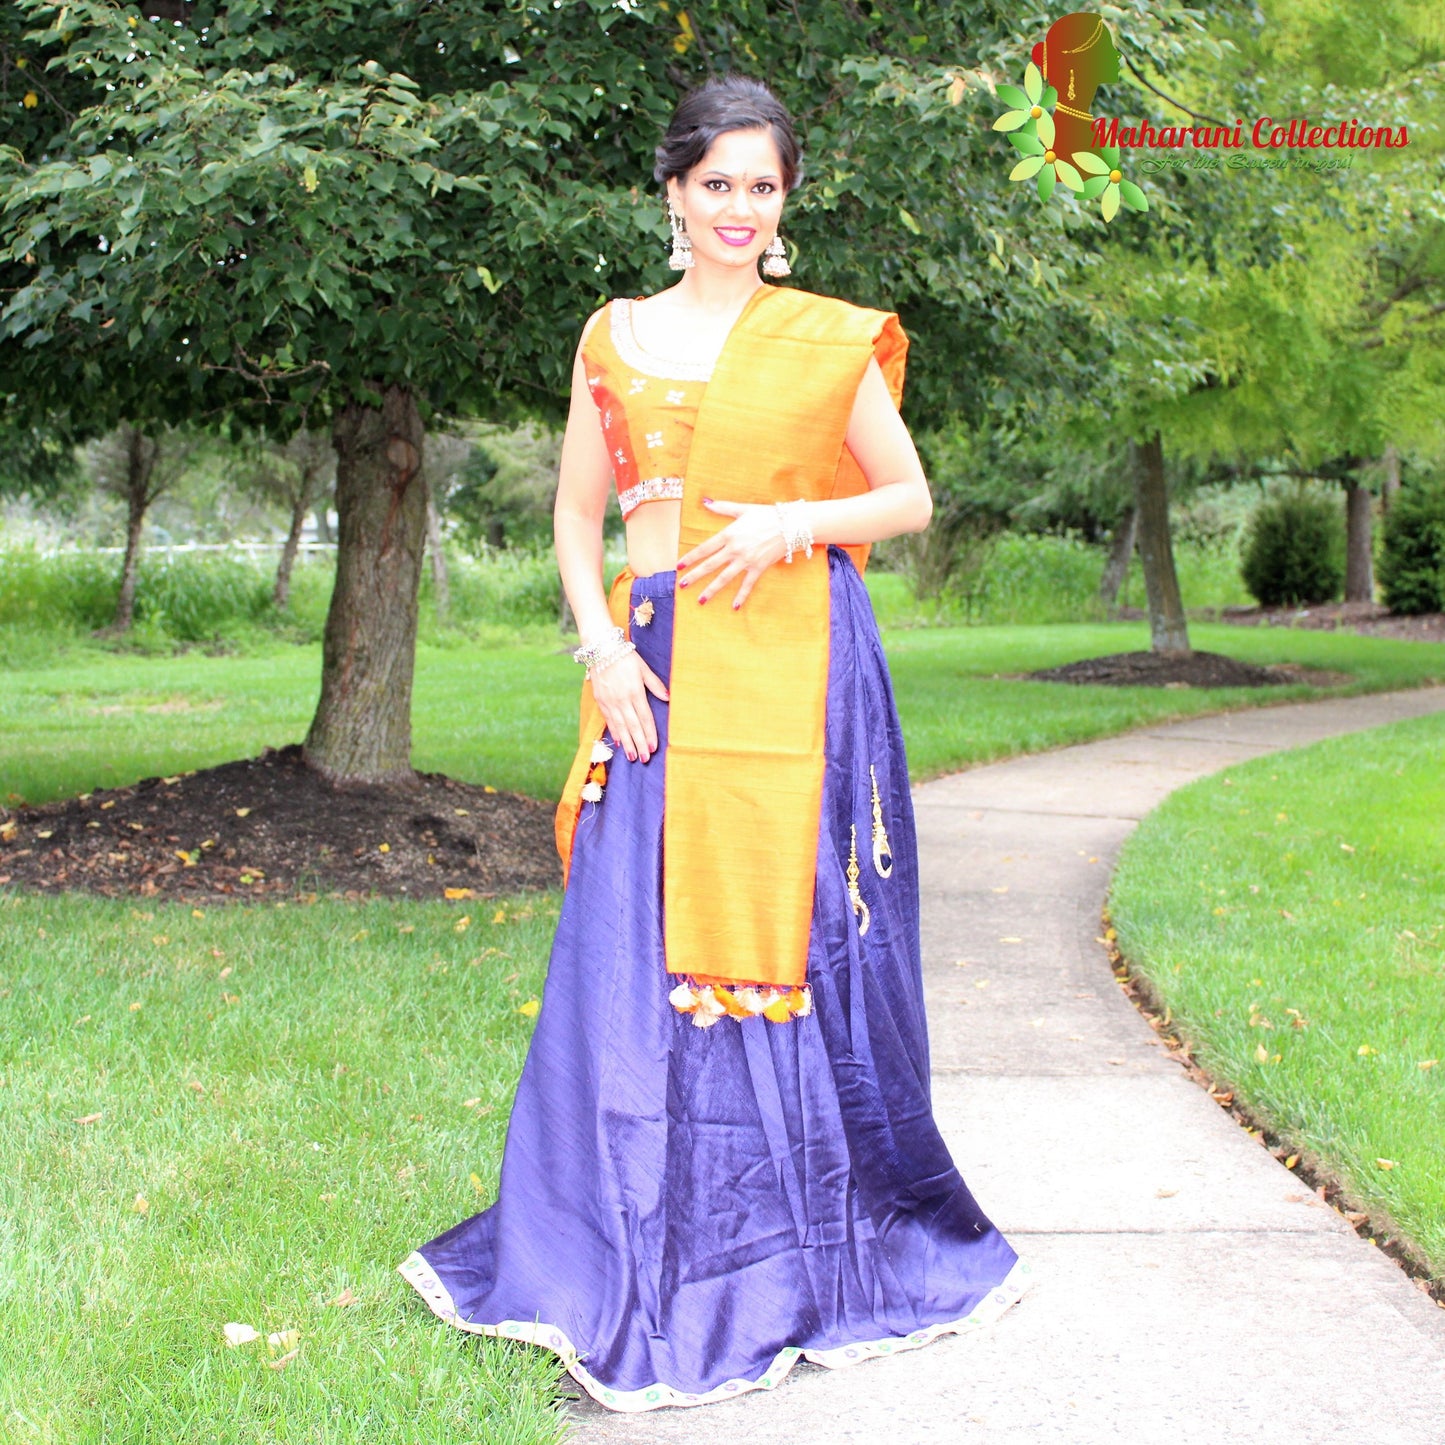 Maharani's Pure Tussar Silk Lehenga - Blue and Yellow (L)